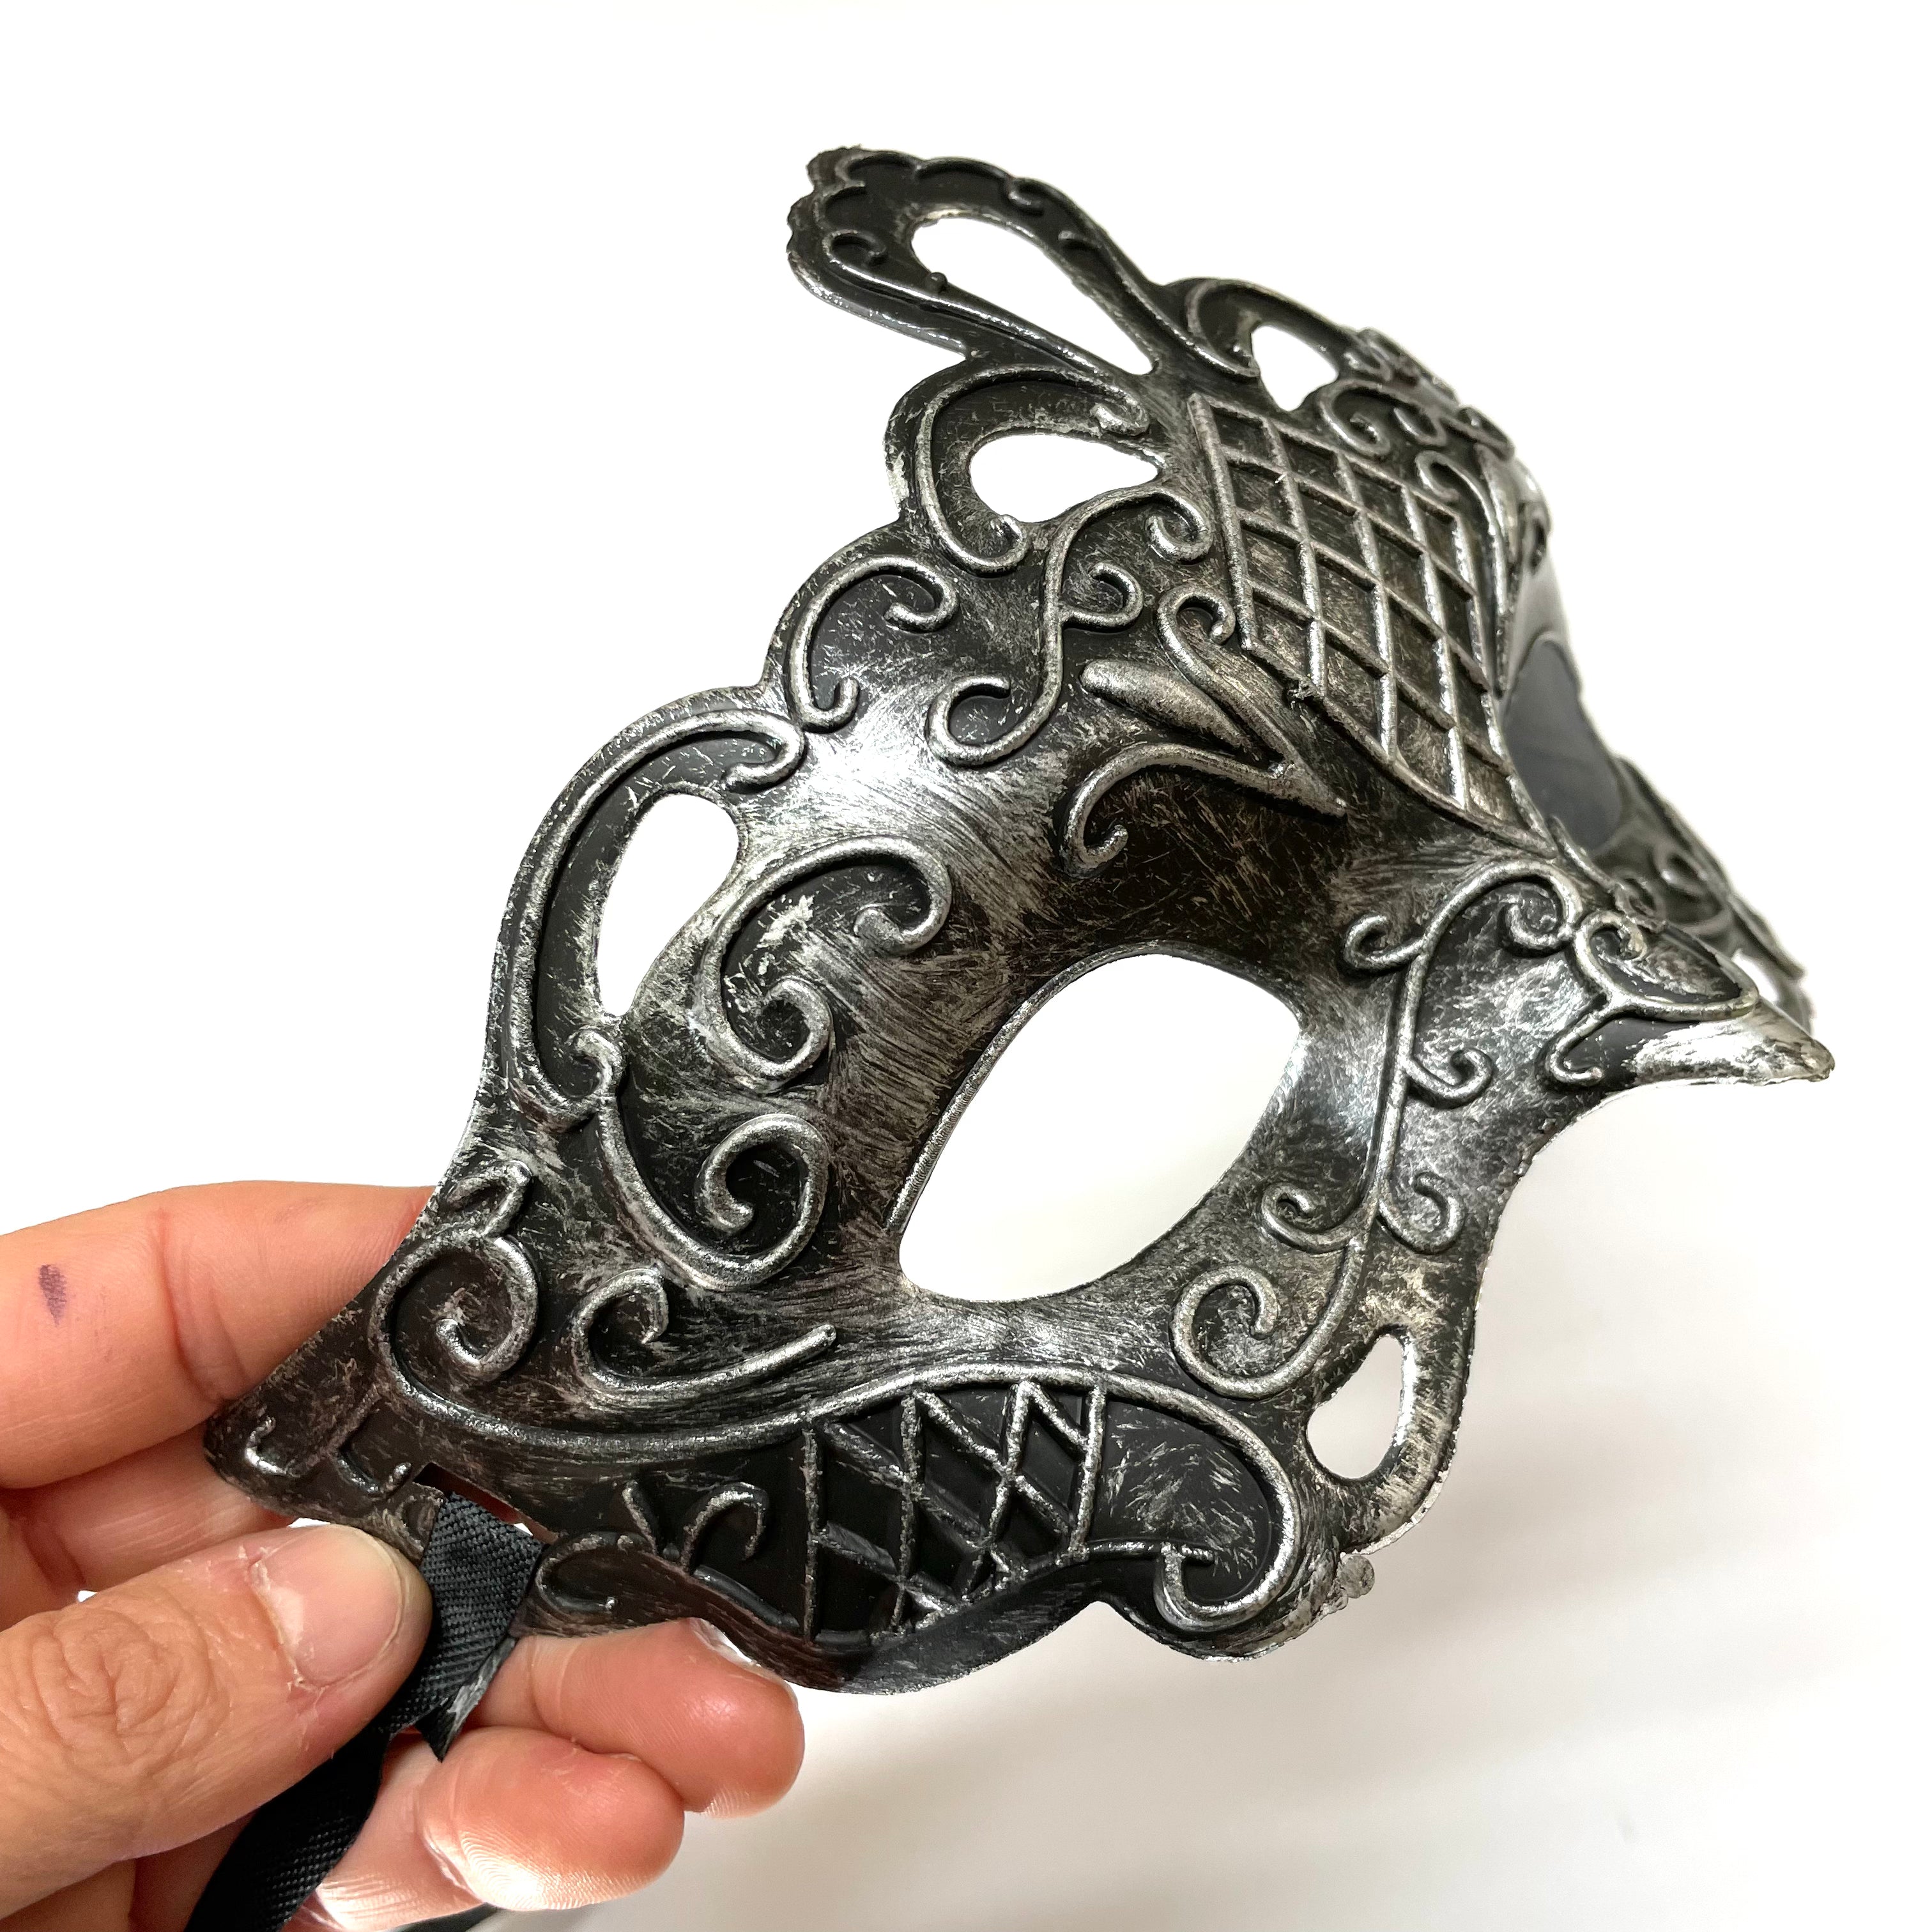 Man Sexy Elegant Masquerade Ball Party Mask - Silver ((Style 10))